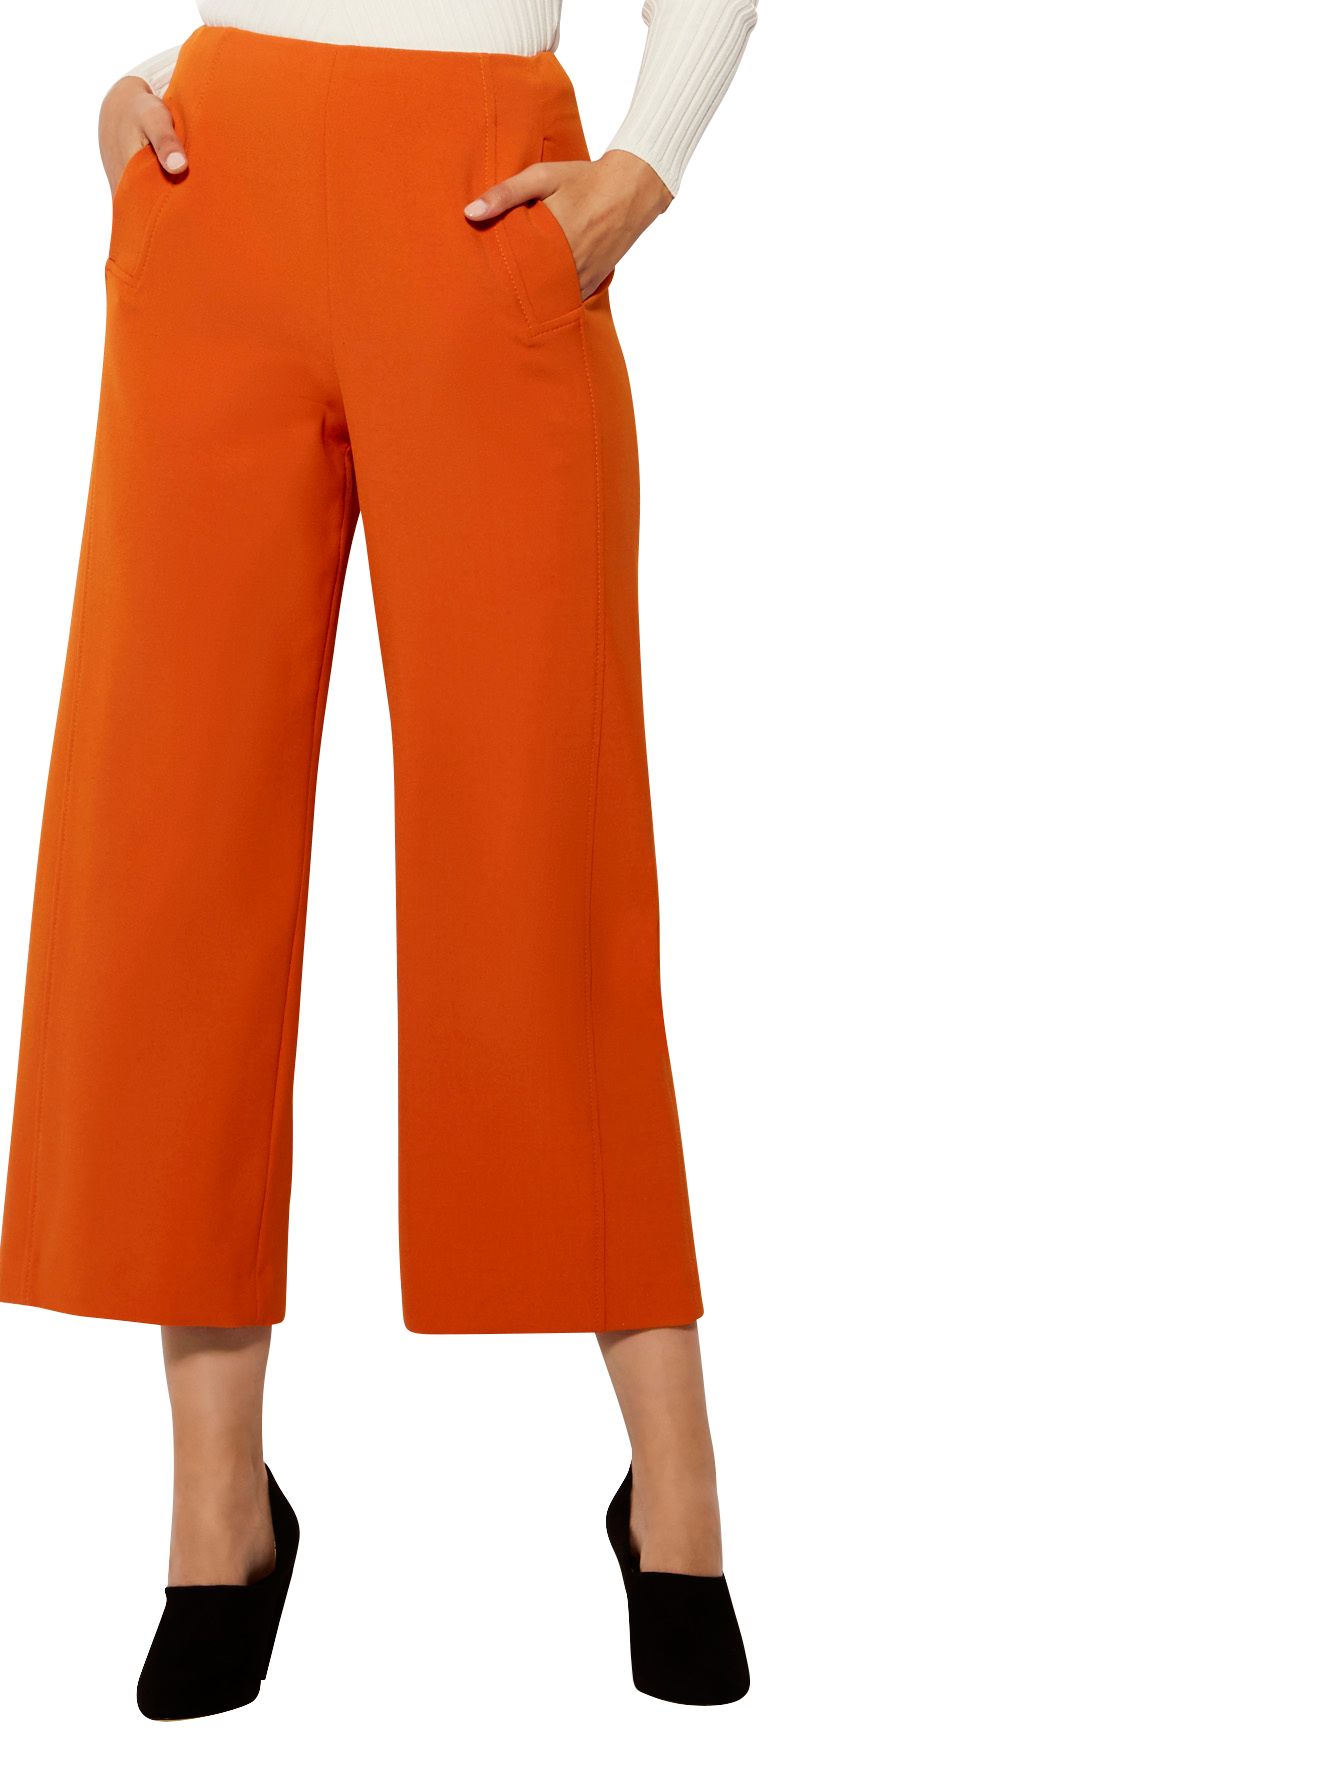 Karen Millen High Waisted Wide Leg Cropped Trousers, Burnt Orange at John Lewis & Partners